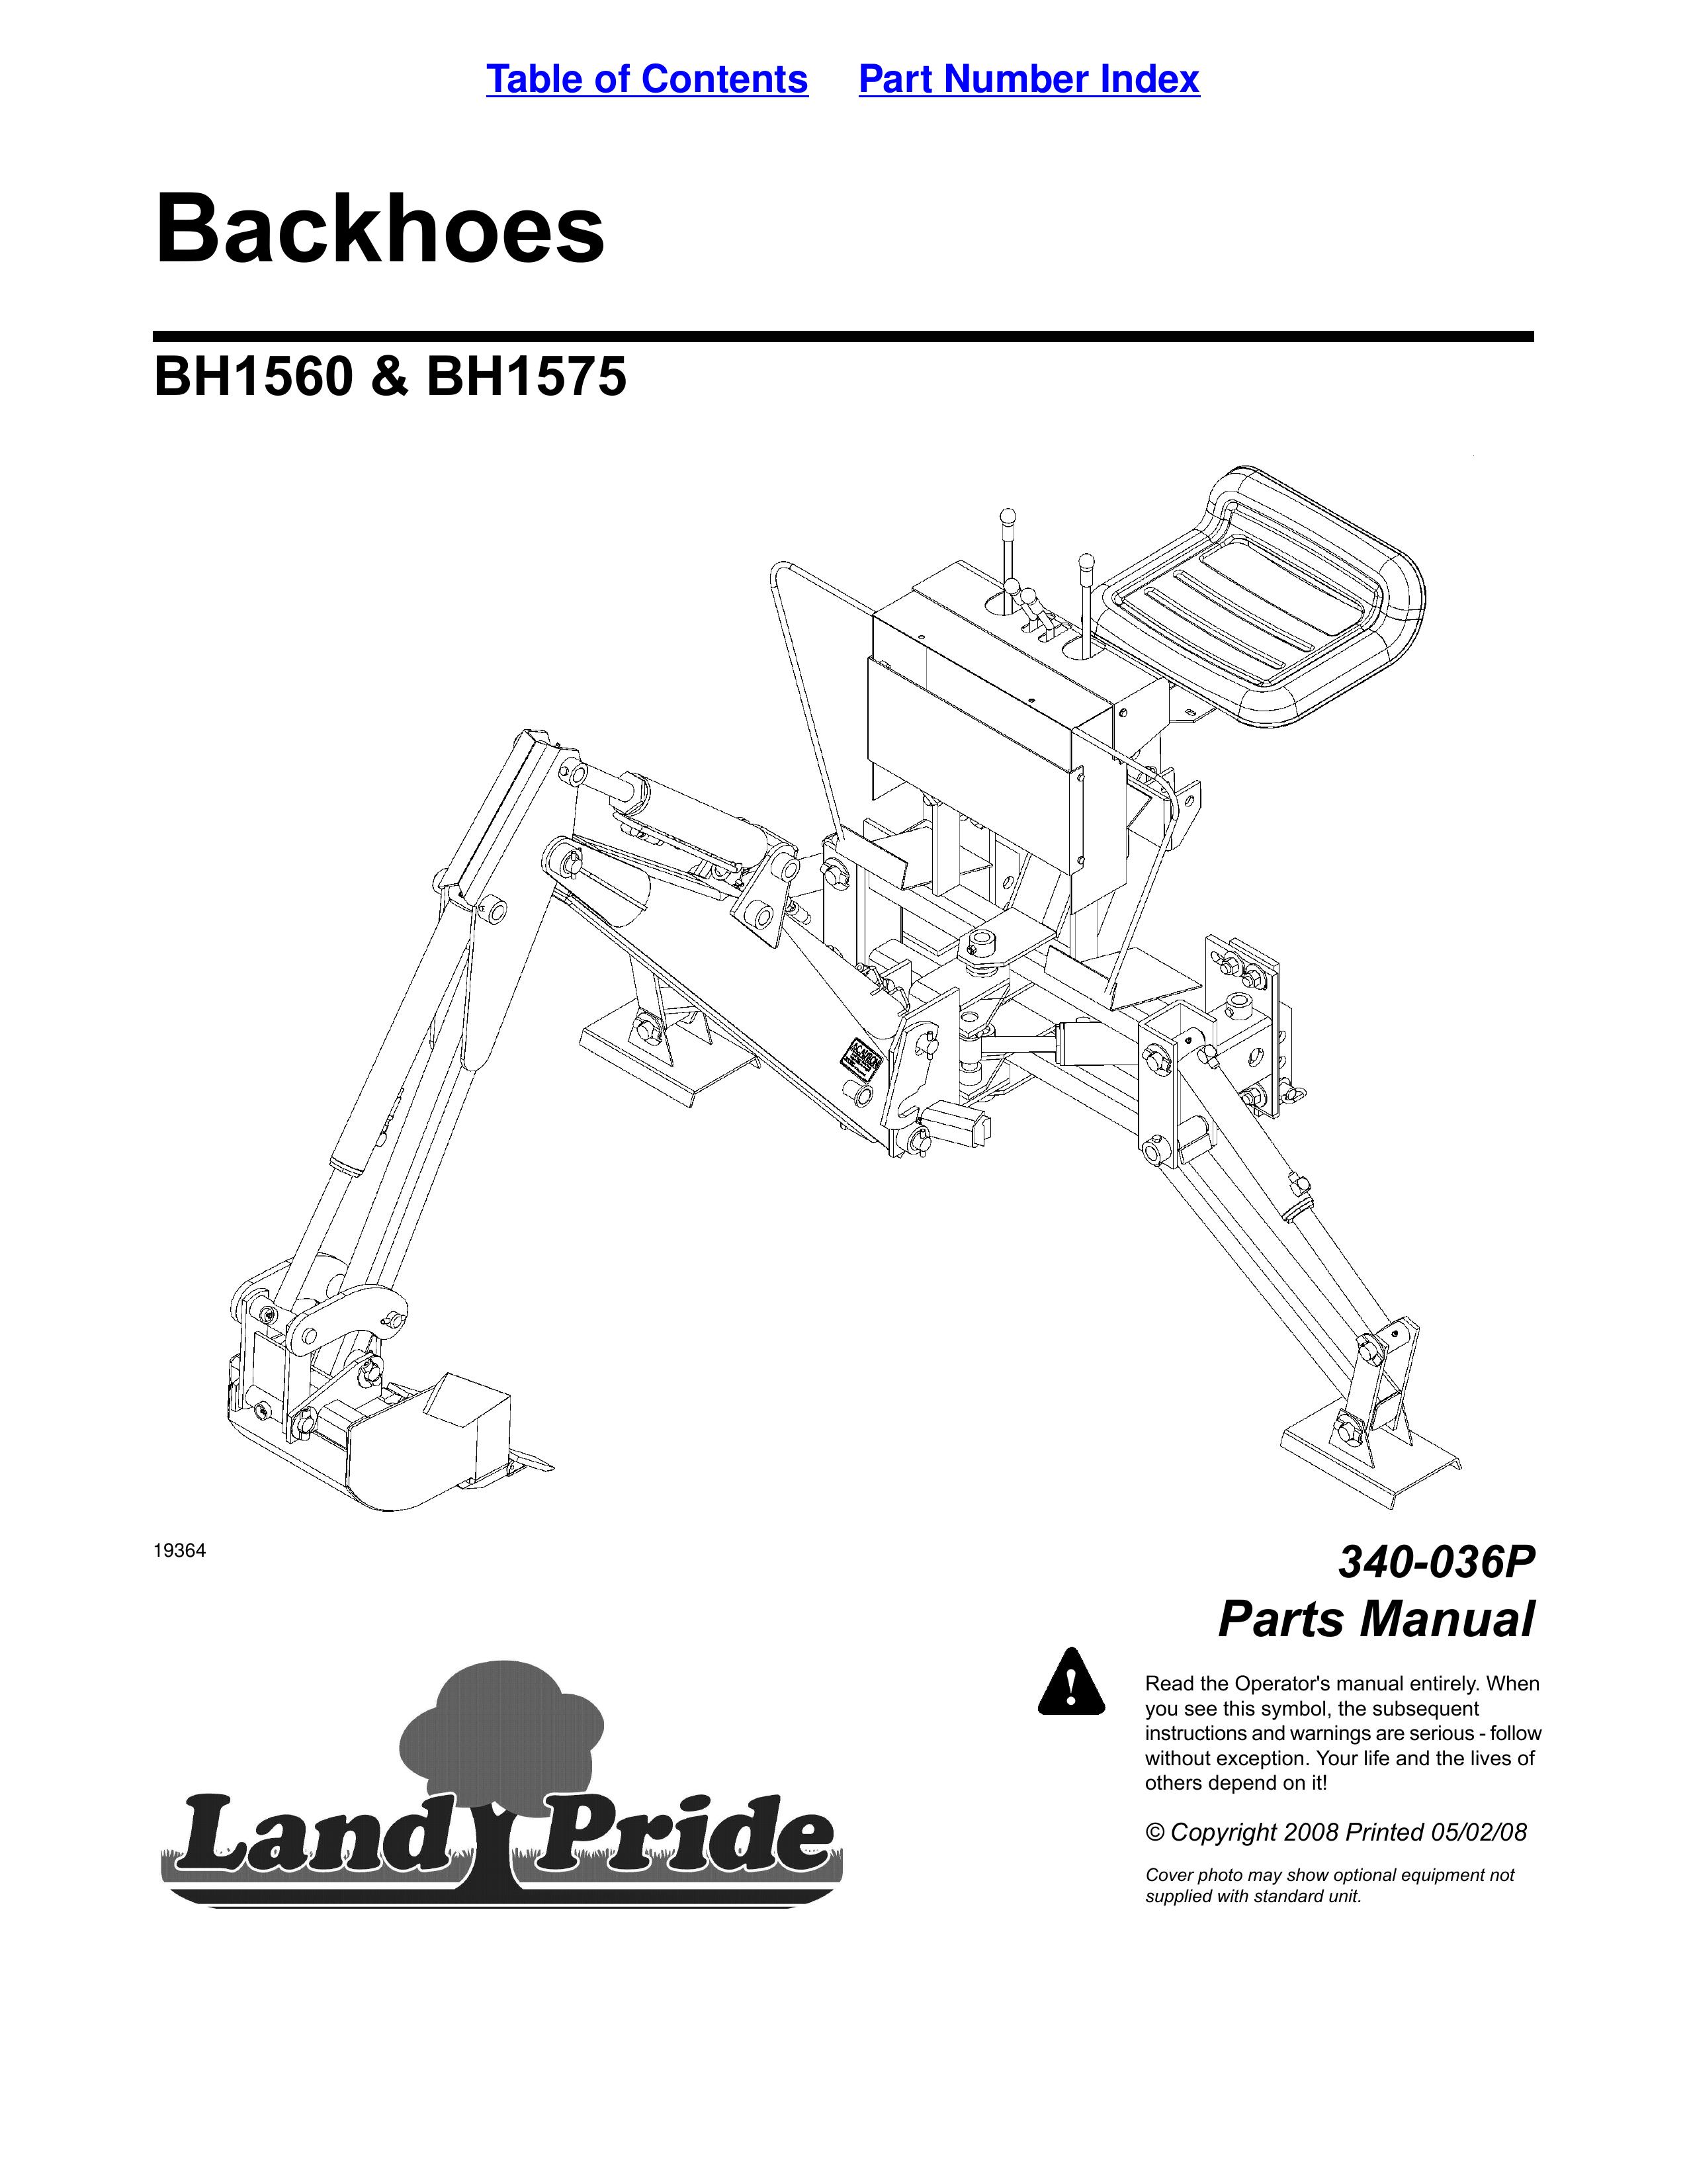 Land Pride BH1560 Compact Excavator User Manual